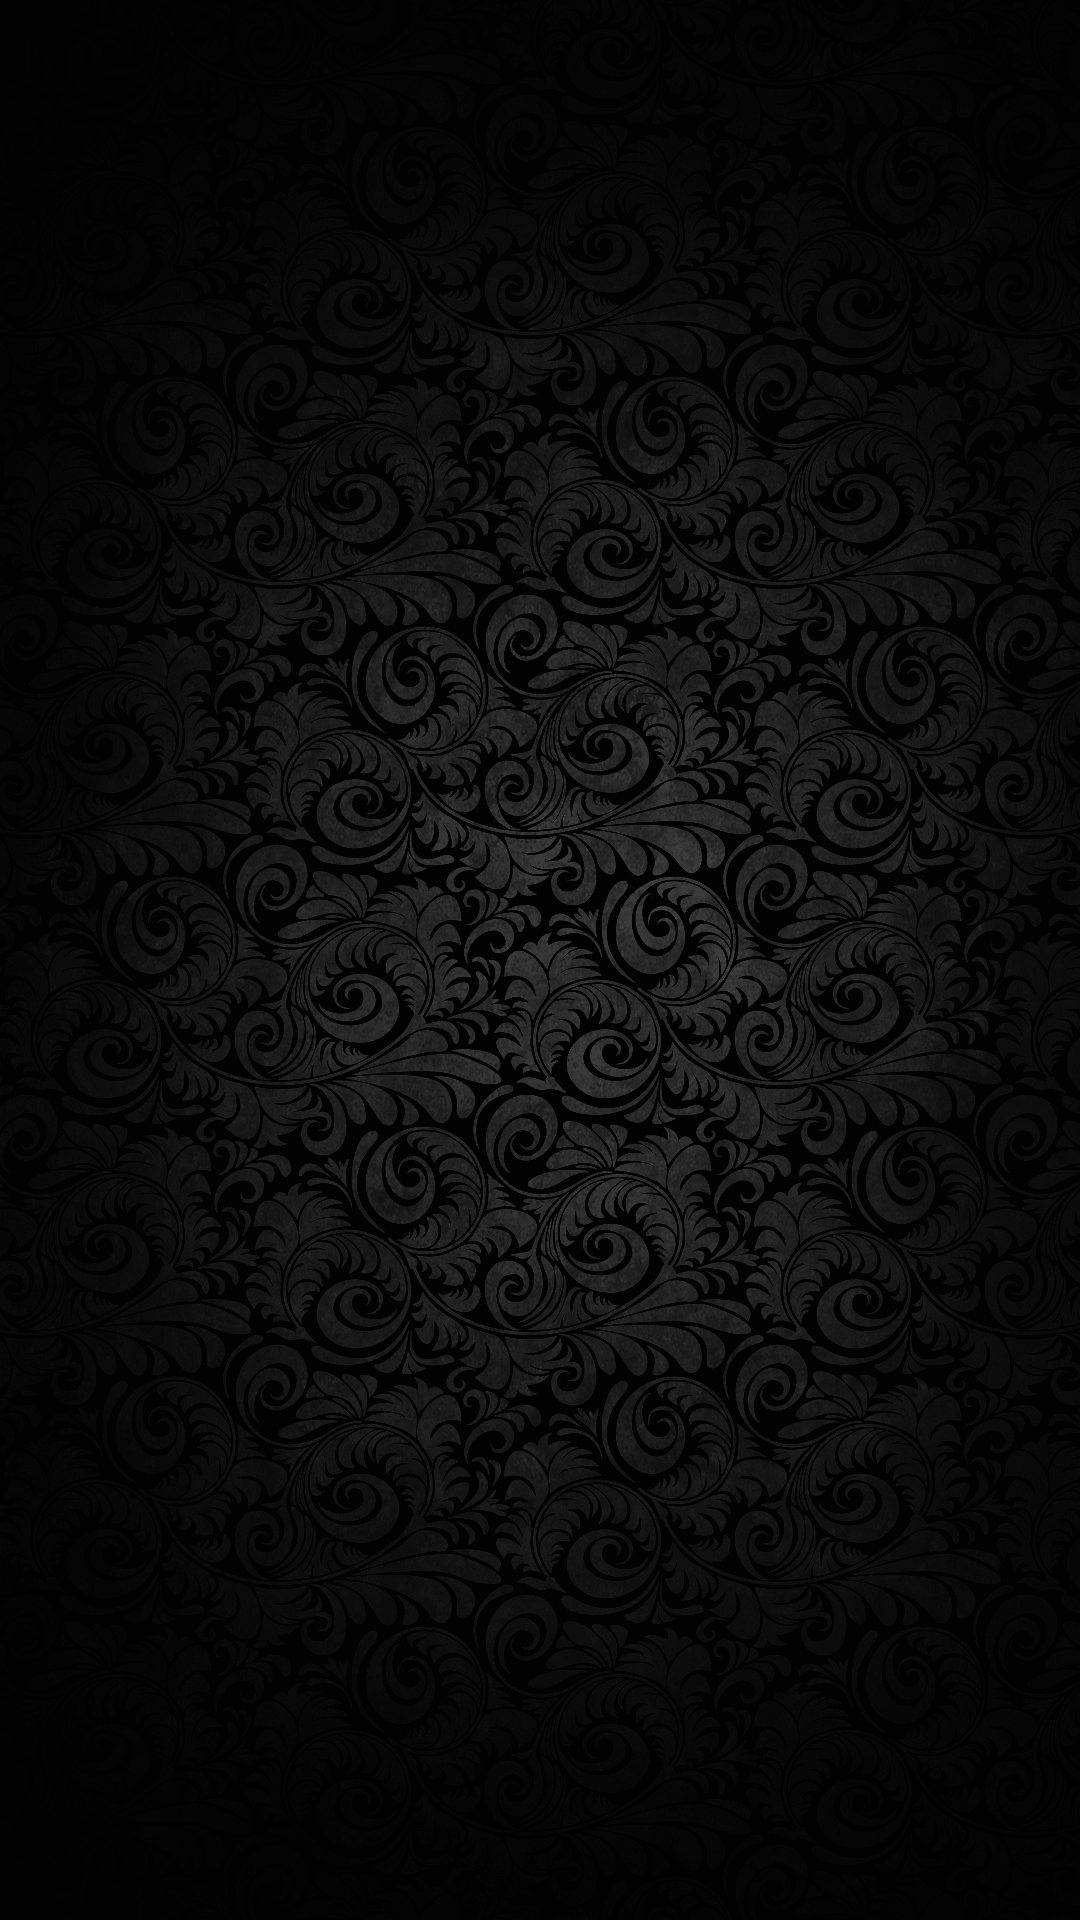 Wallpaper Full HD X Smartphone Dark Elegant